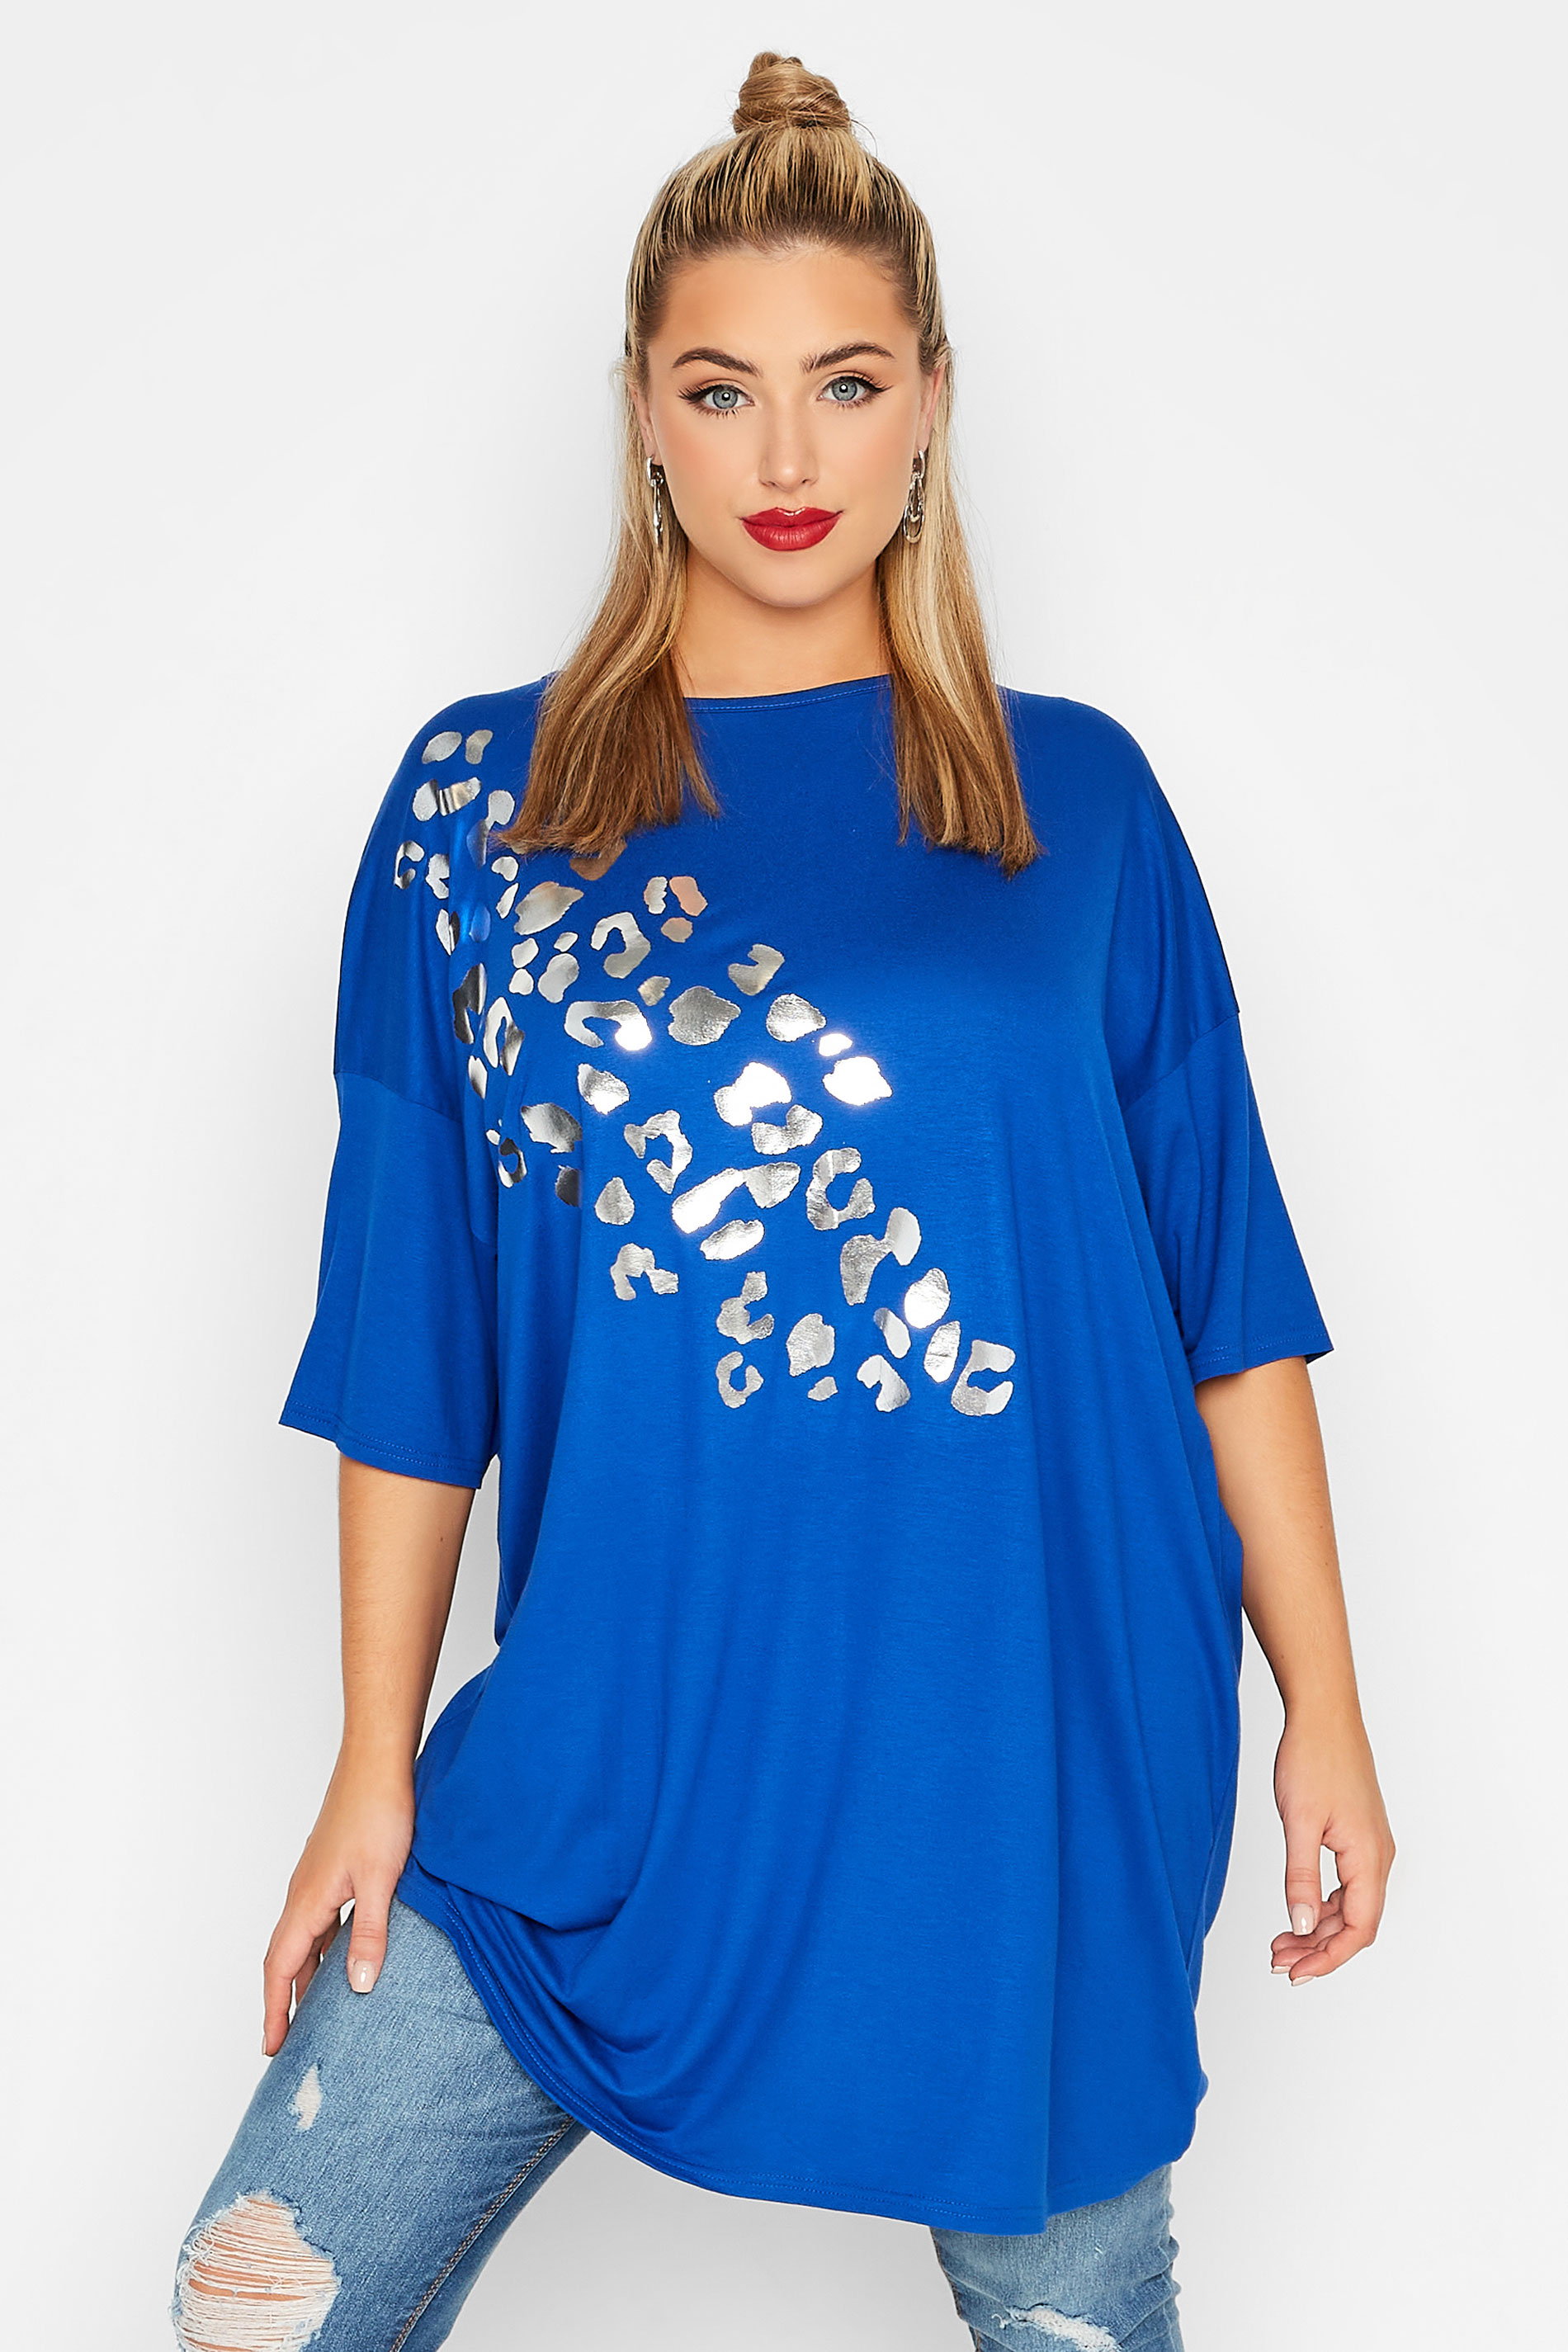 Grande taille  Tops Grande taille  T-Shirts | LIMITED COLLECTION - T-Shirt Bleu Roi Léopard Argenté - WI64417